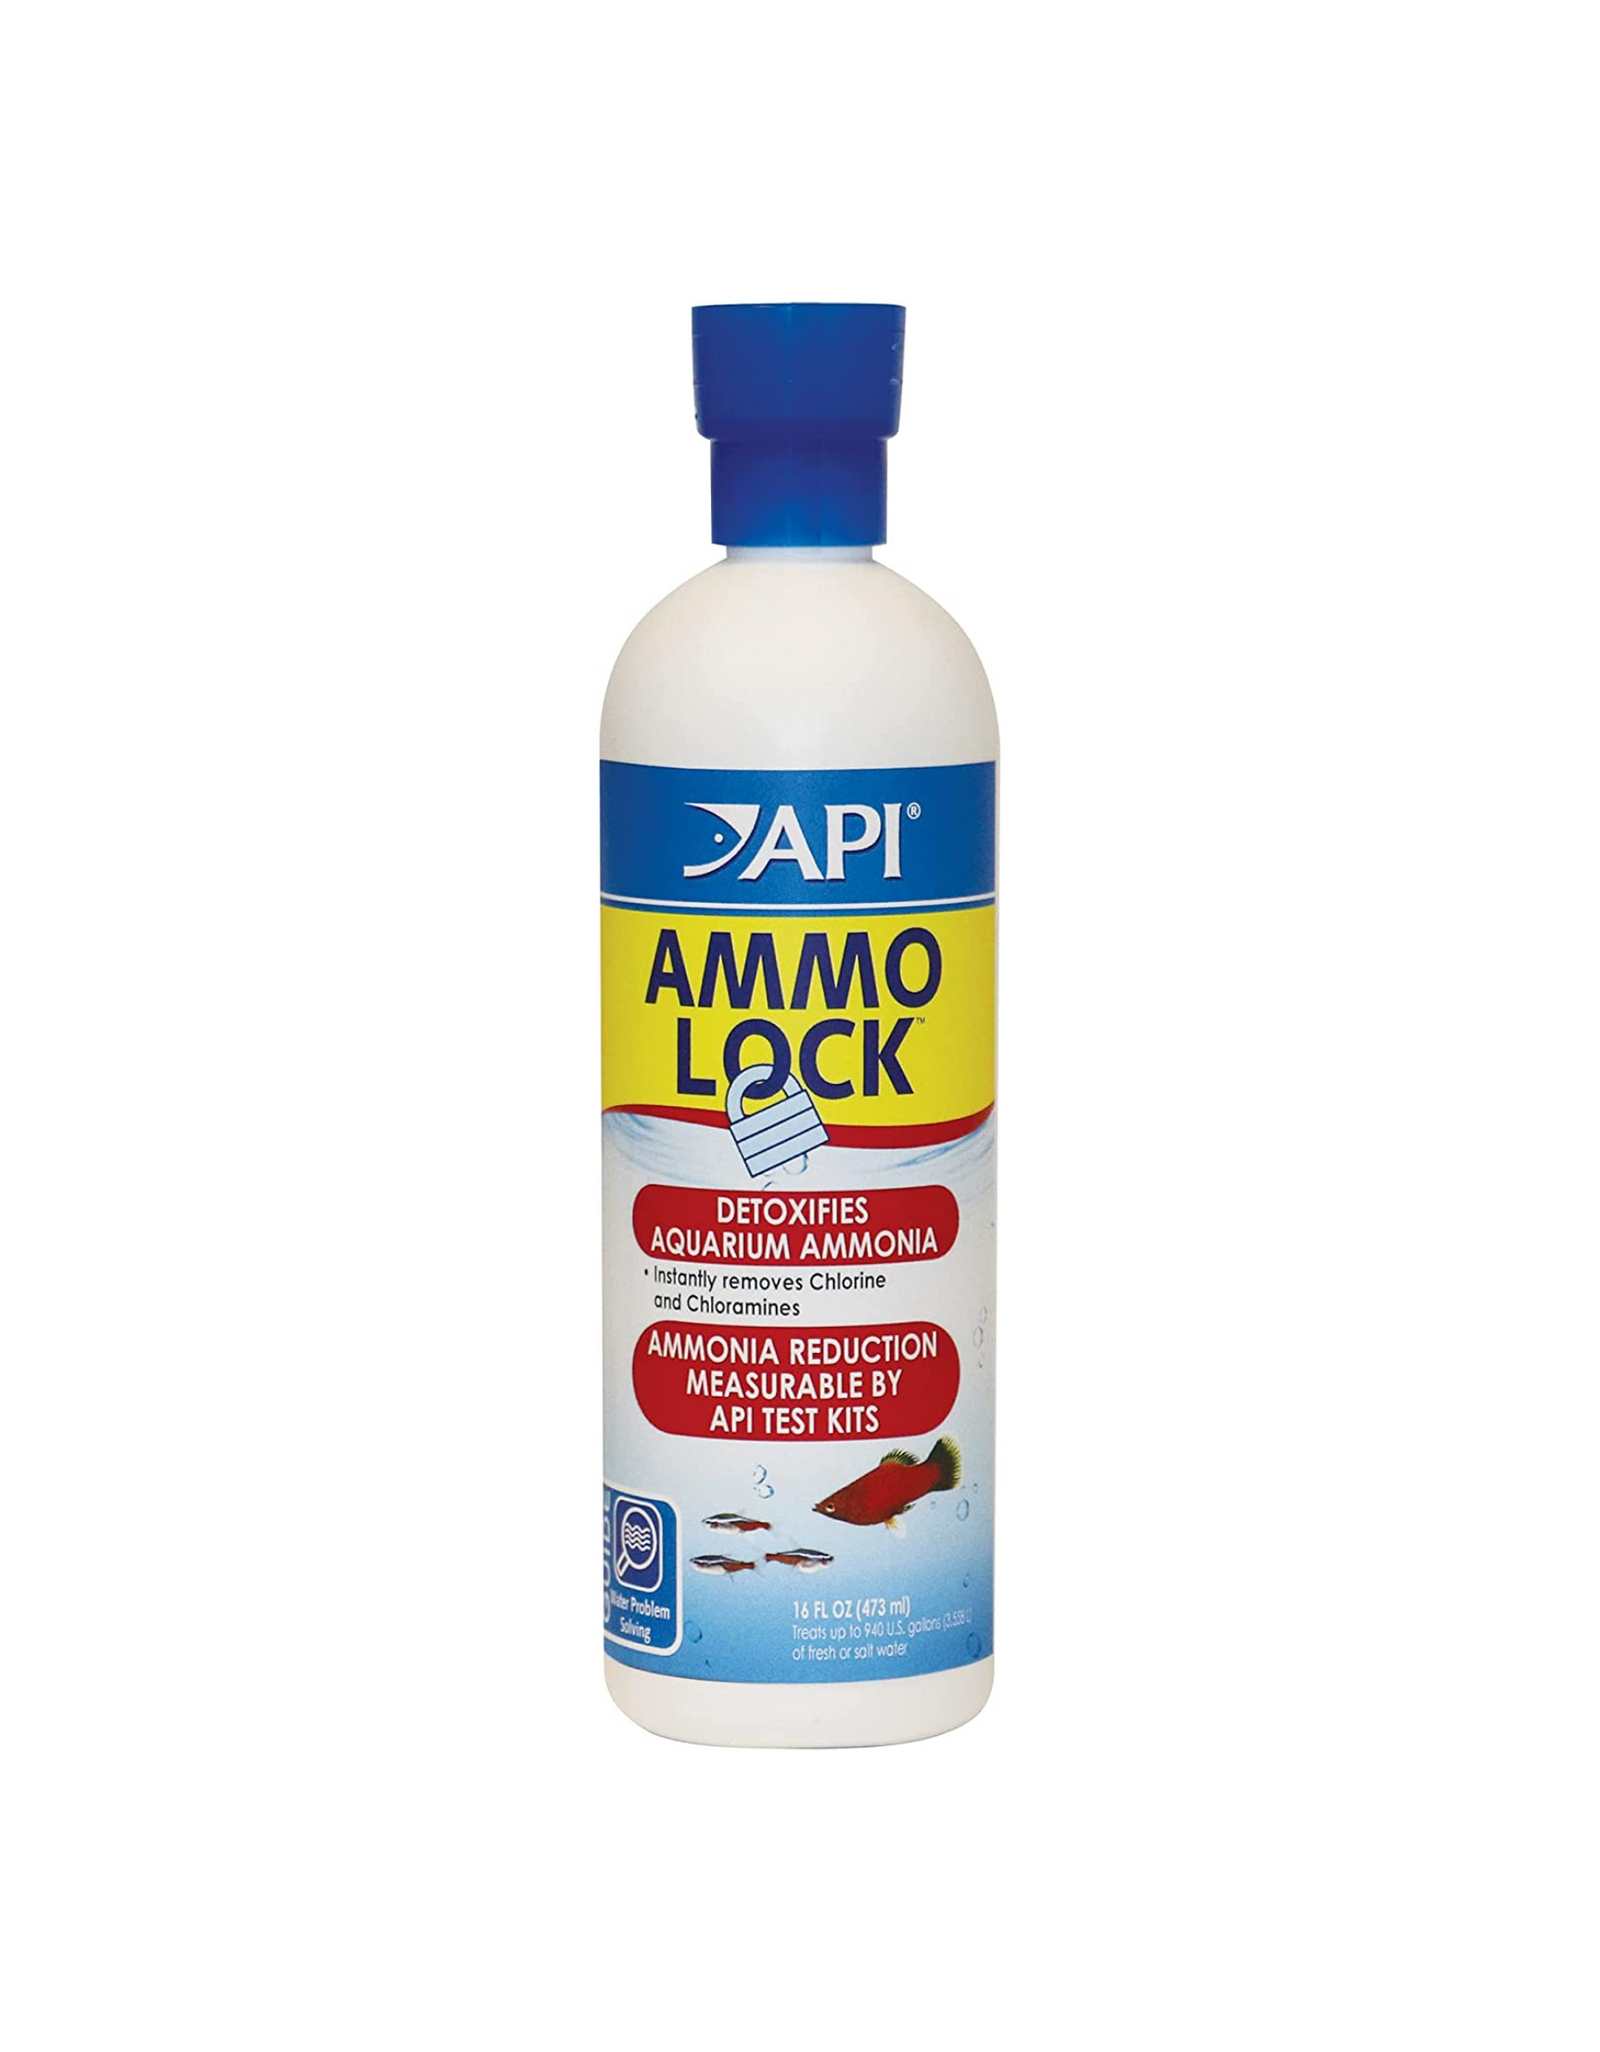 API AMMO-LOCK Aquarium Ammonia Detoxifier 16 oz